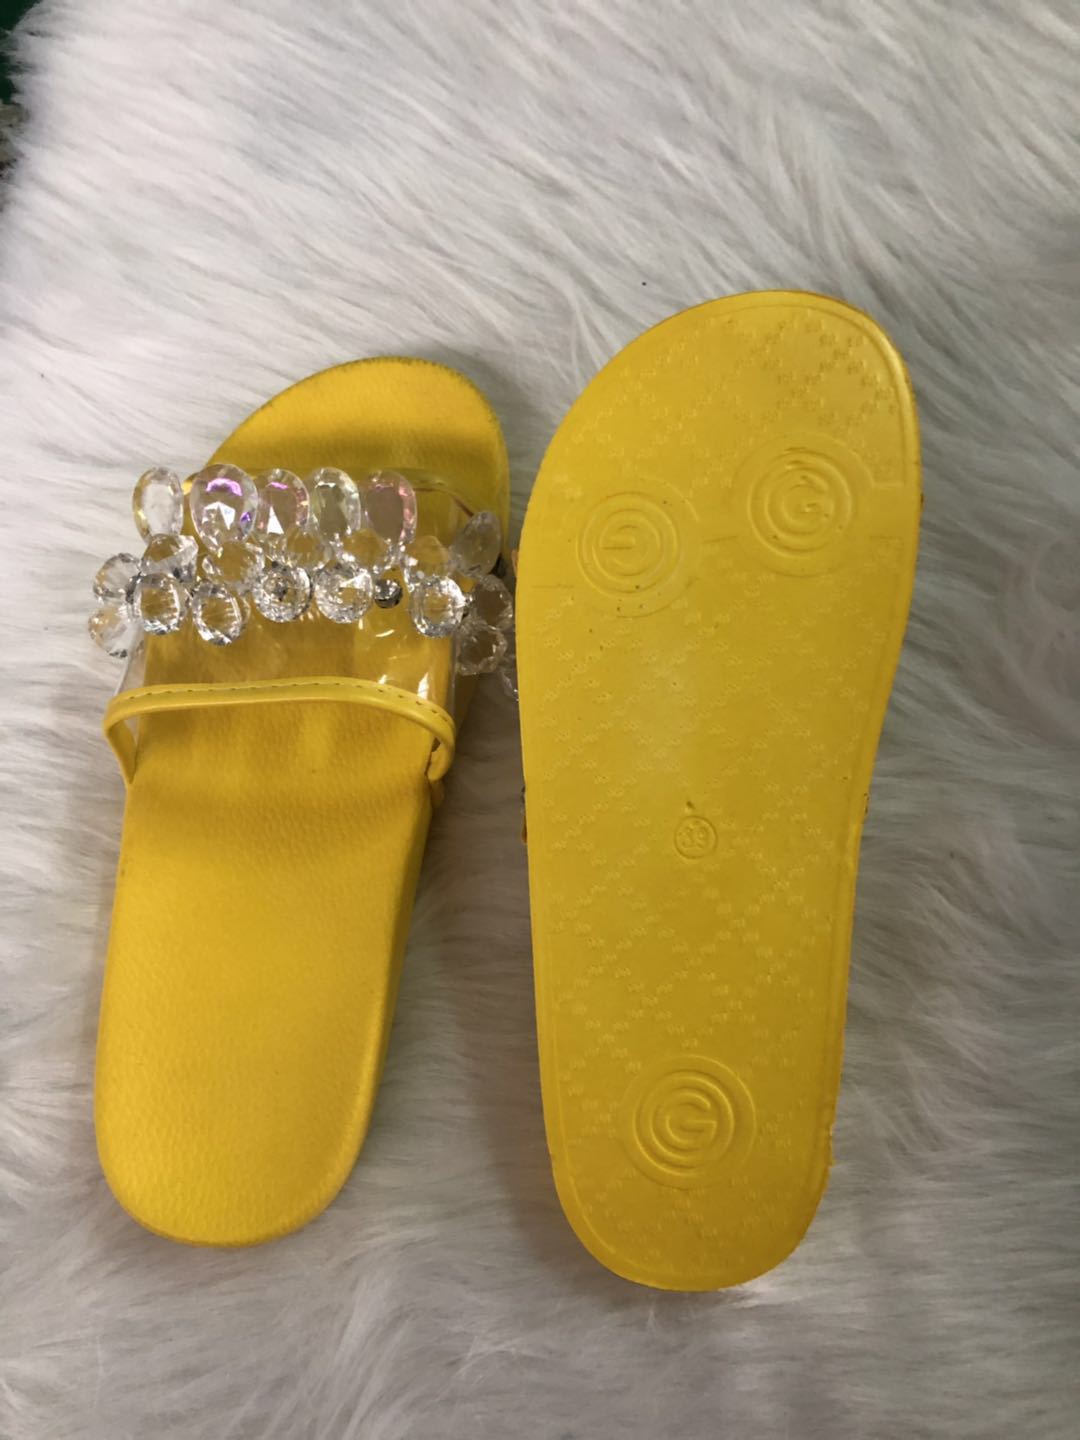 Crystal beach shoes - ladieskits - 0